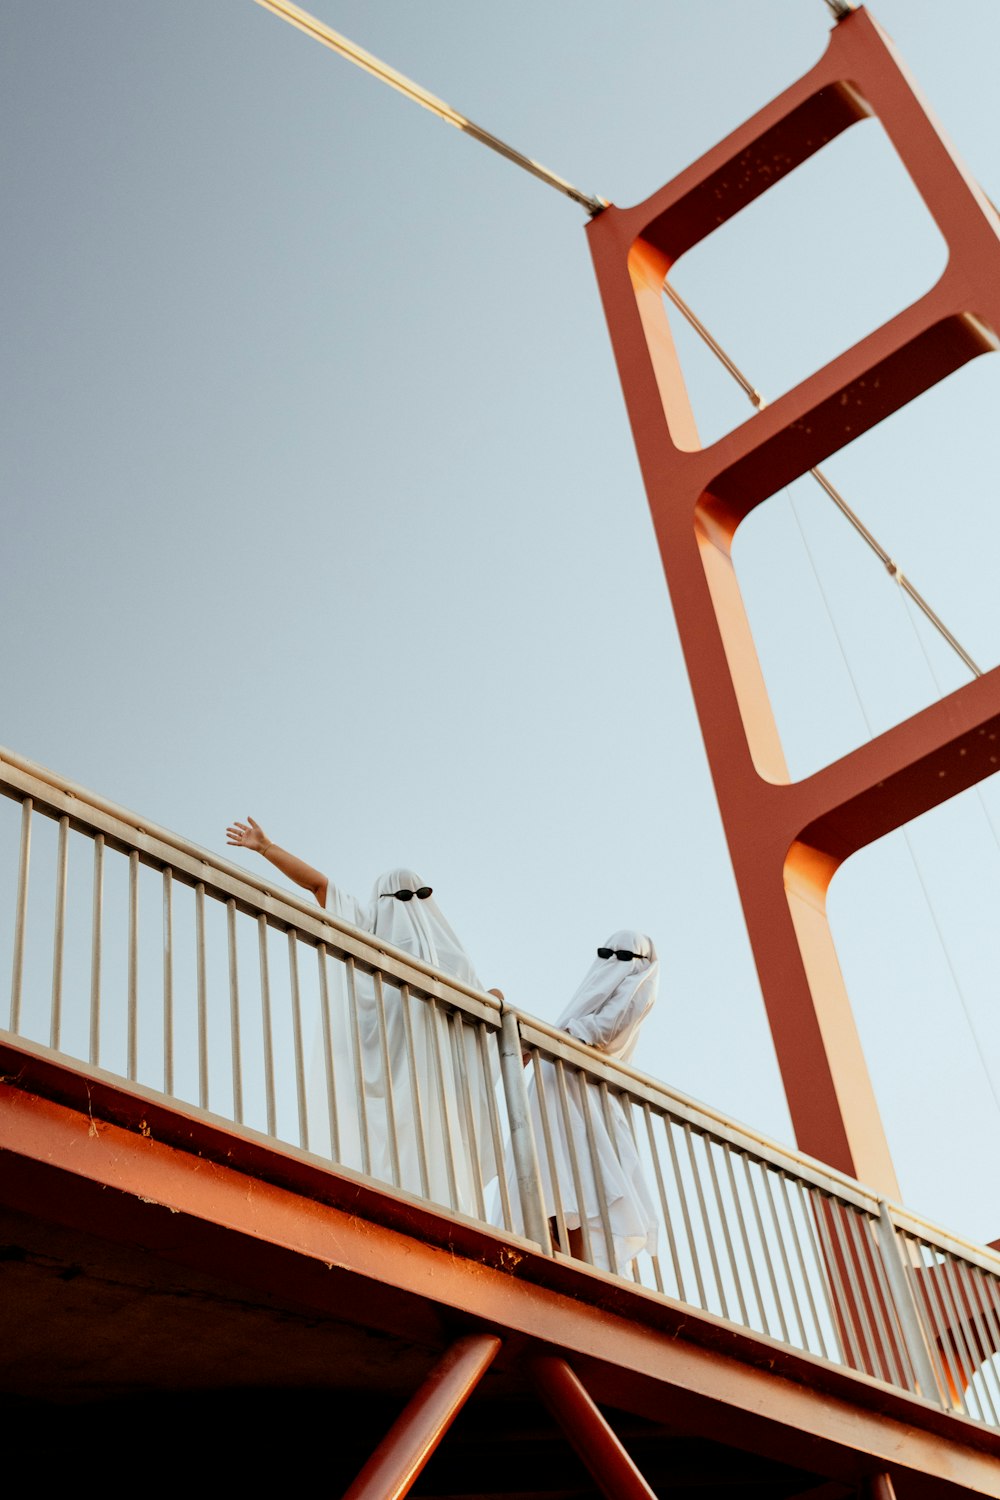 a group of birds on a bridge